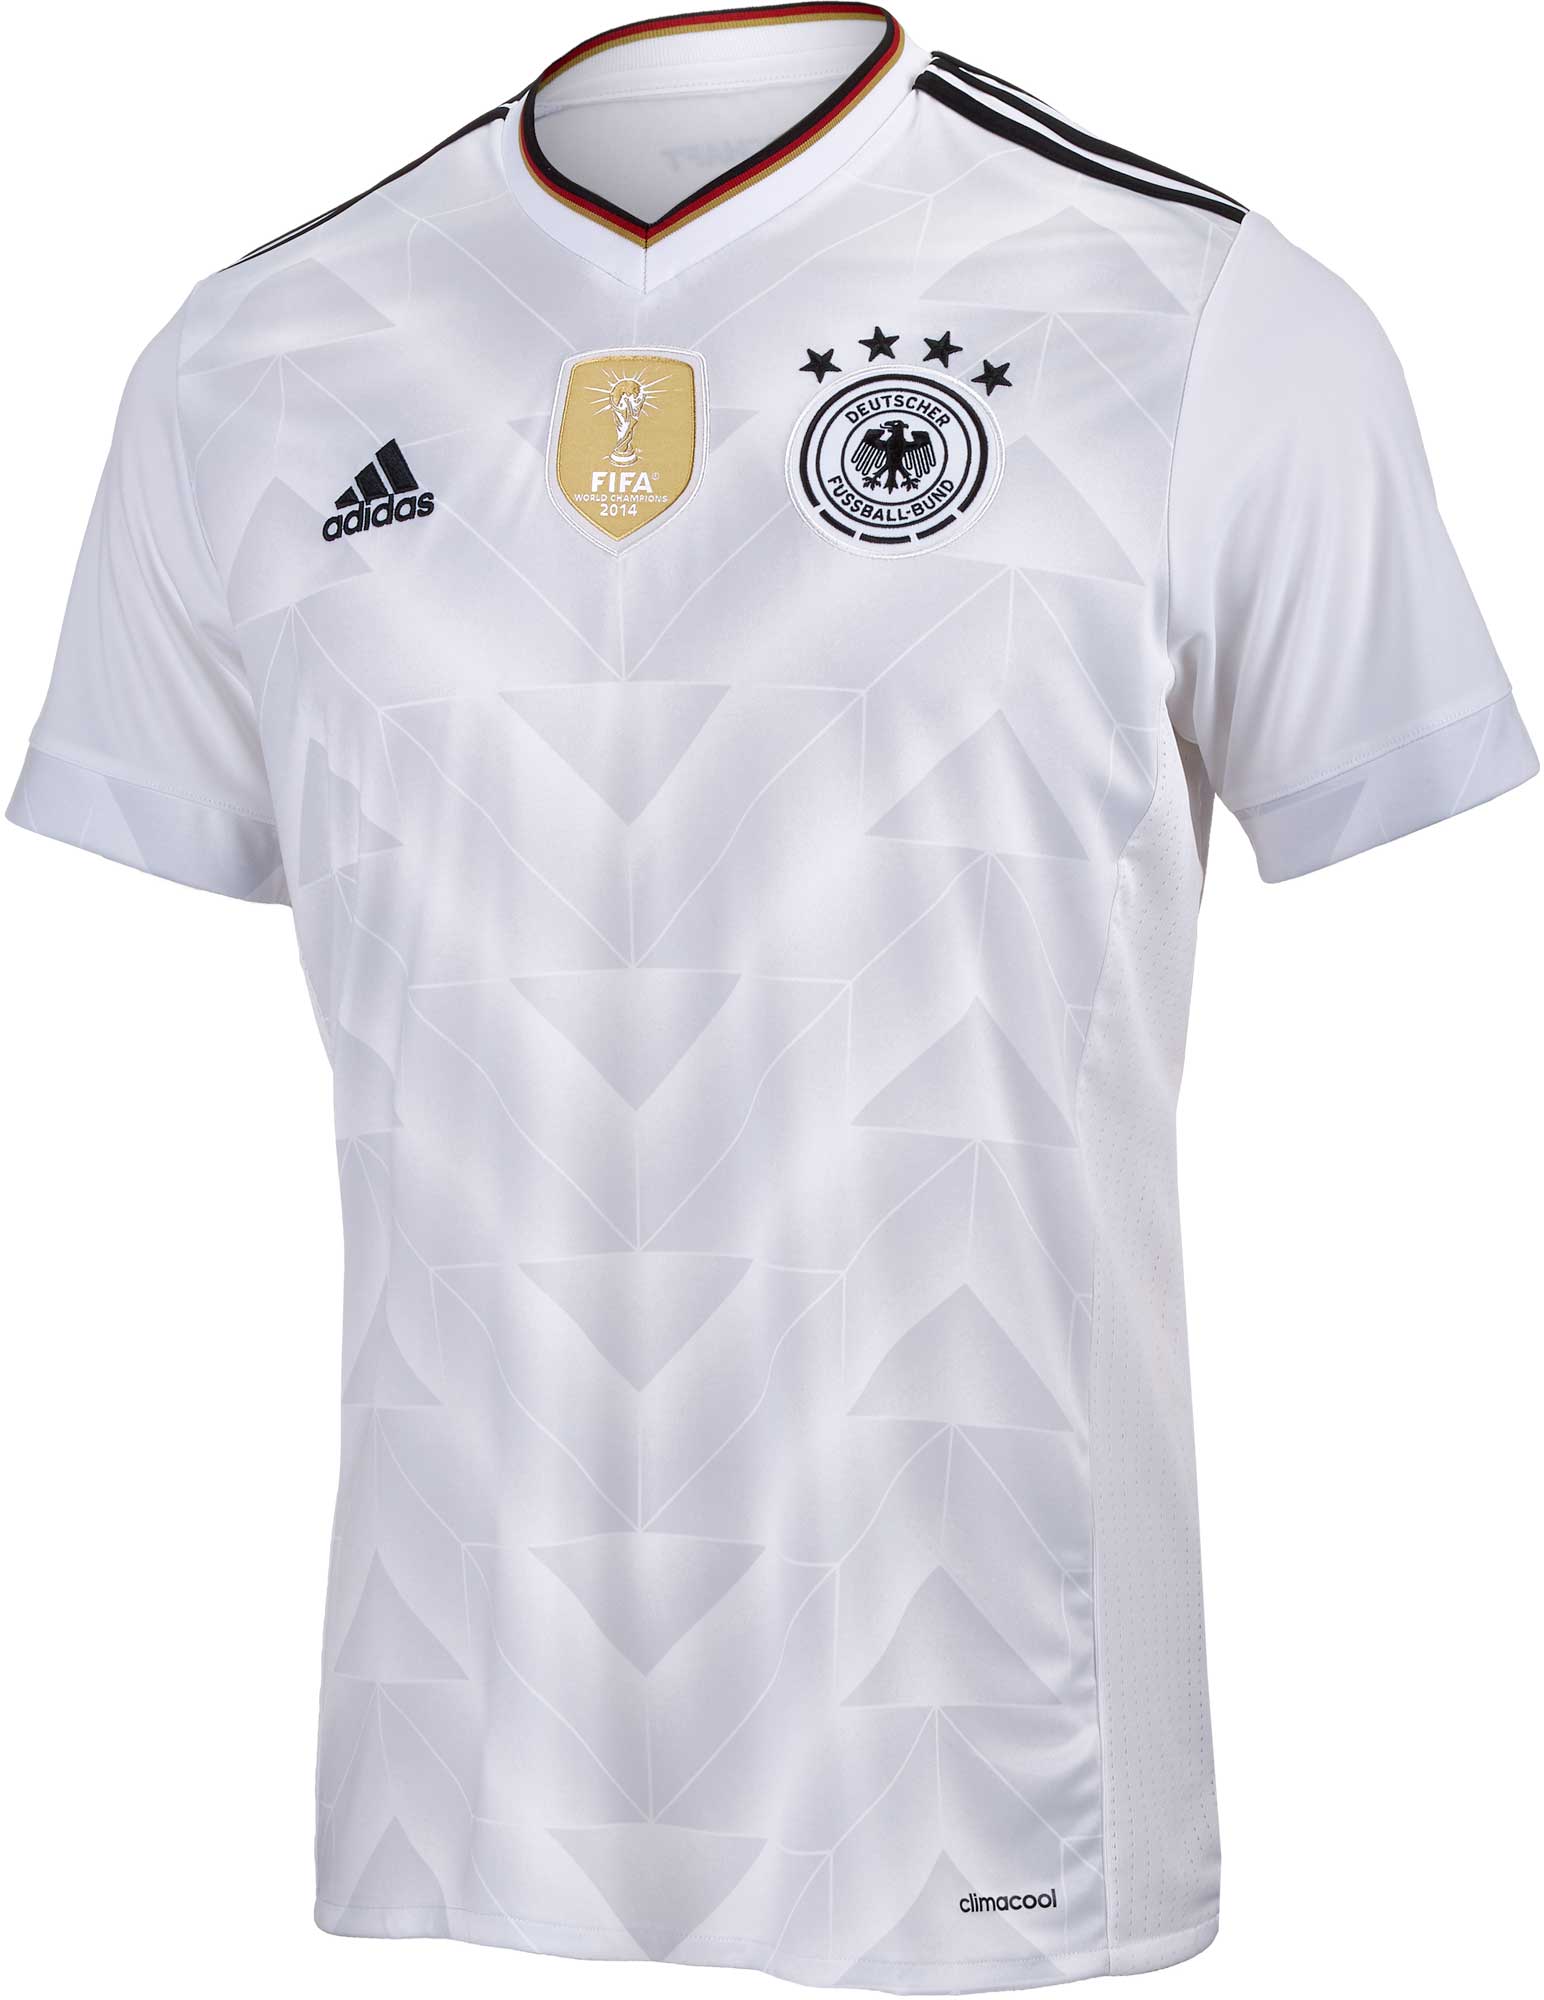 adidas germany jersey 2014